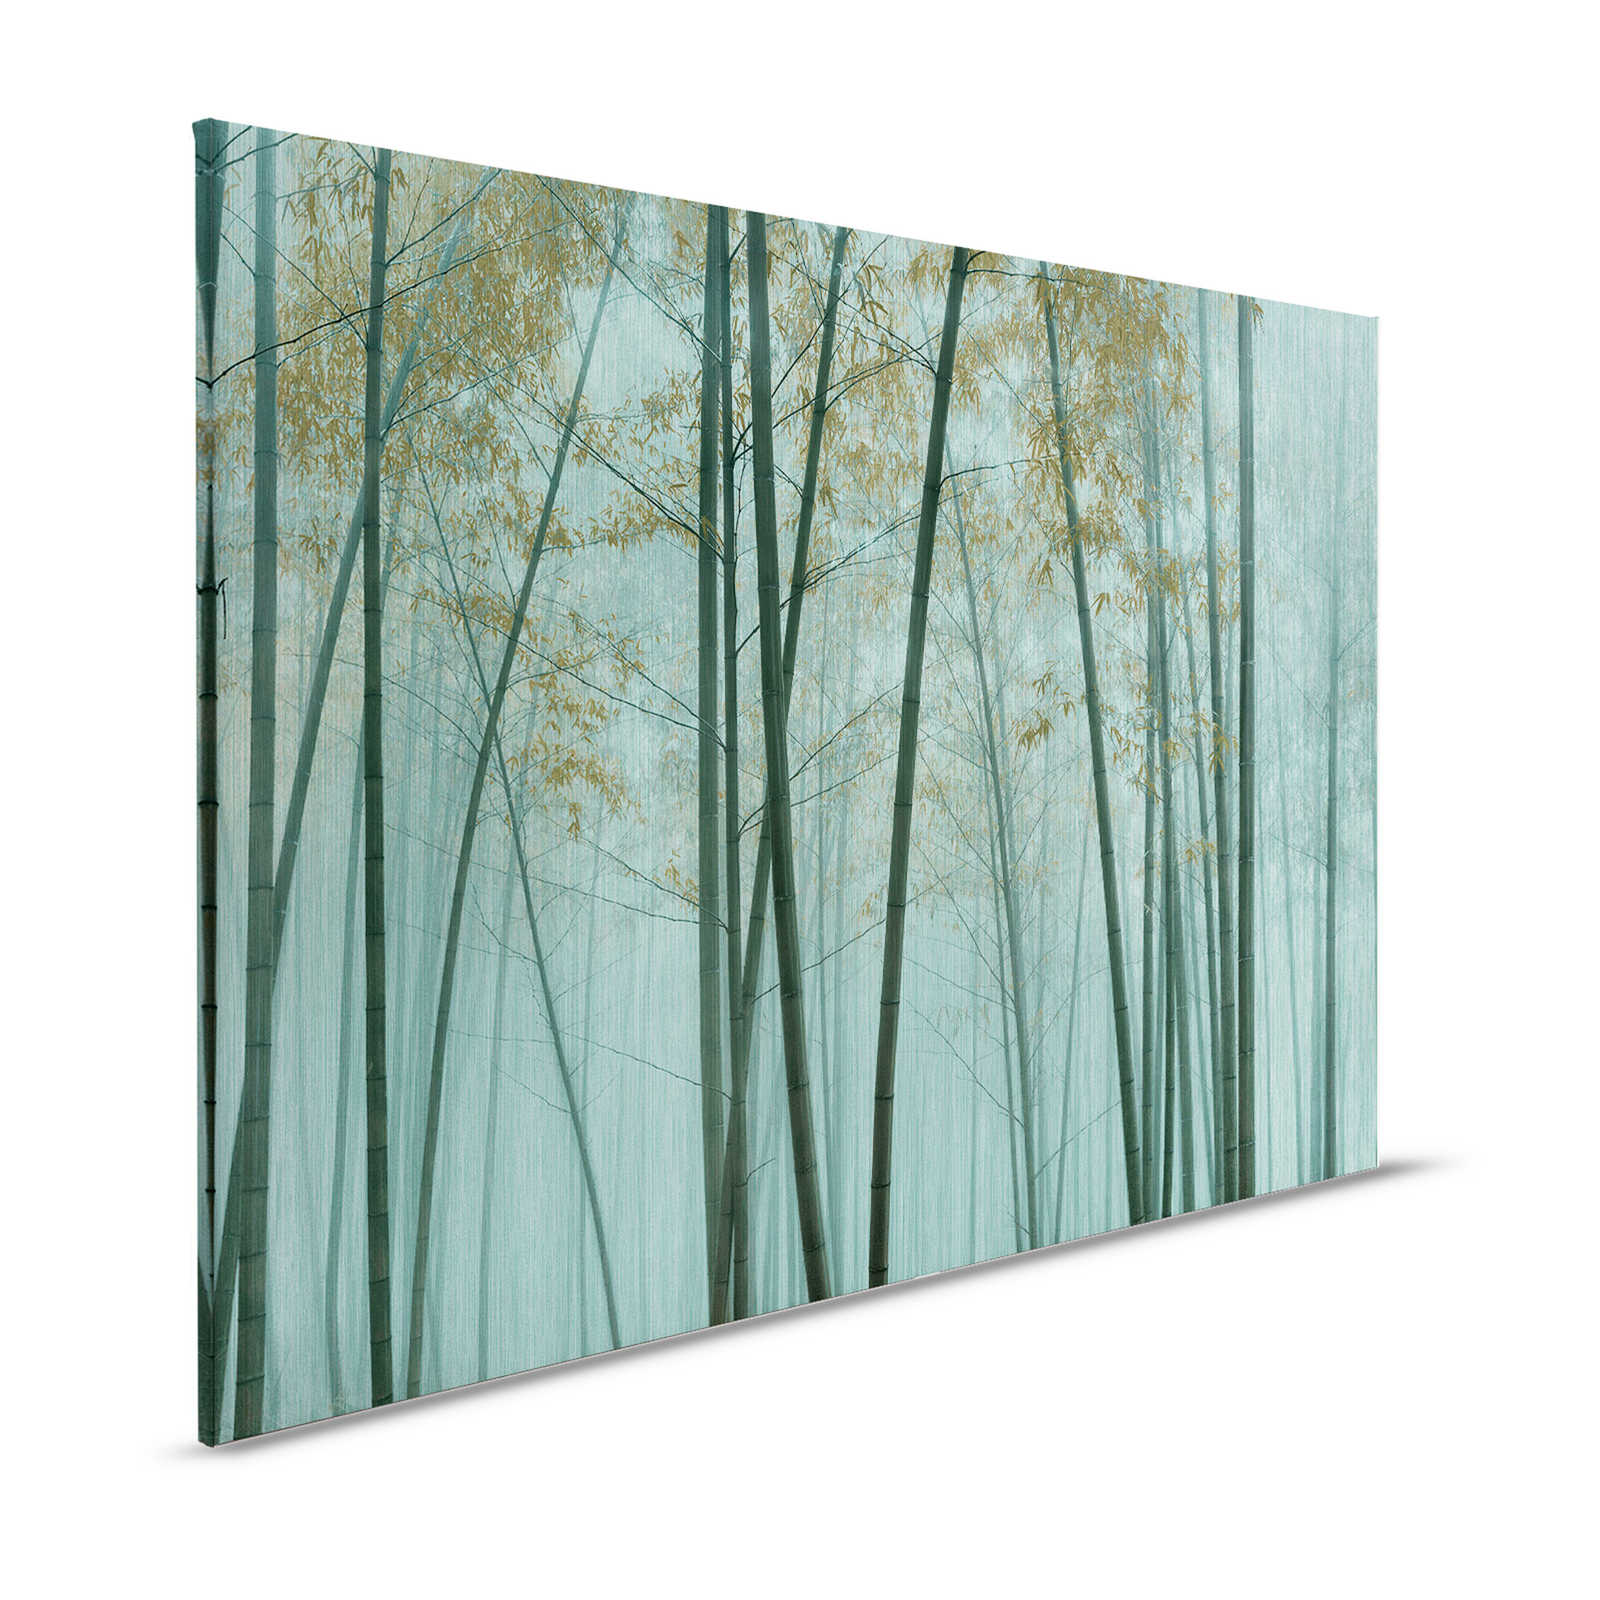 In de Bamboe 3 - Azië Canvas schilderij Bamboebos - 1.20 m x 0.80 m
